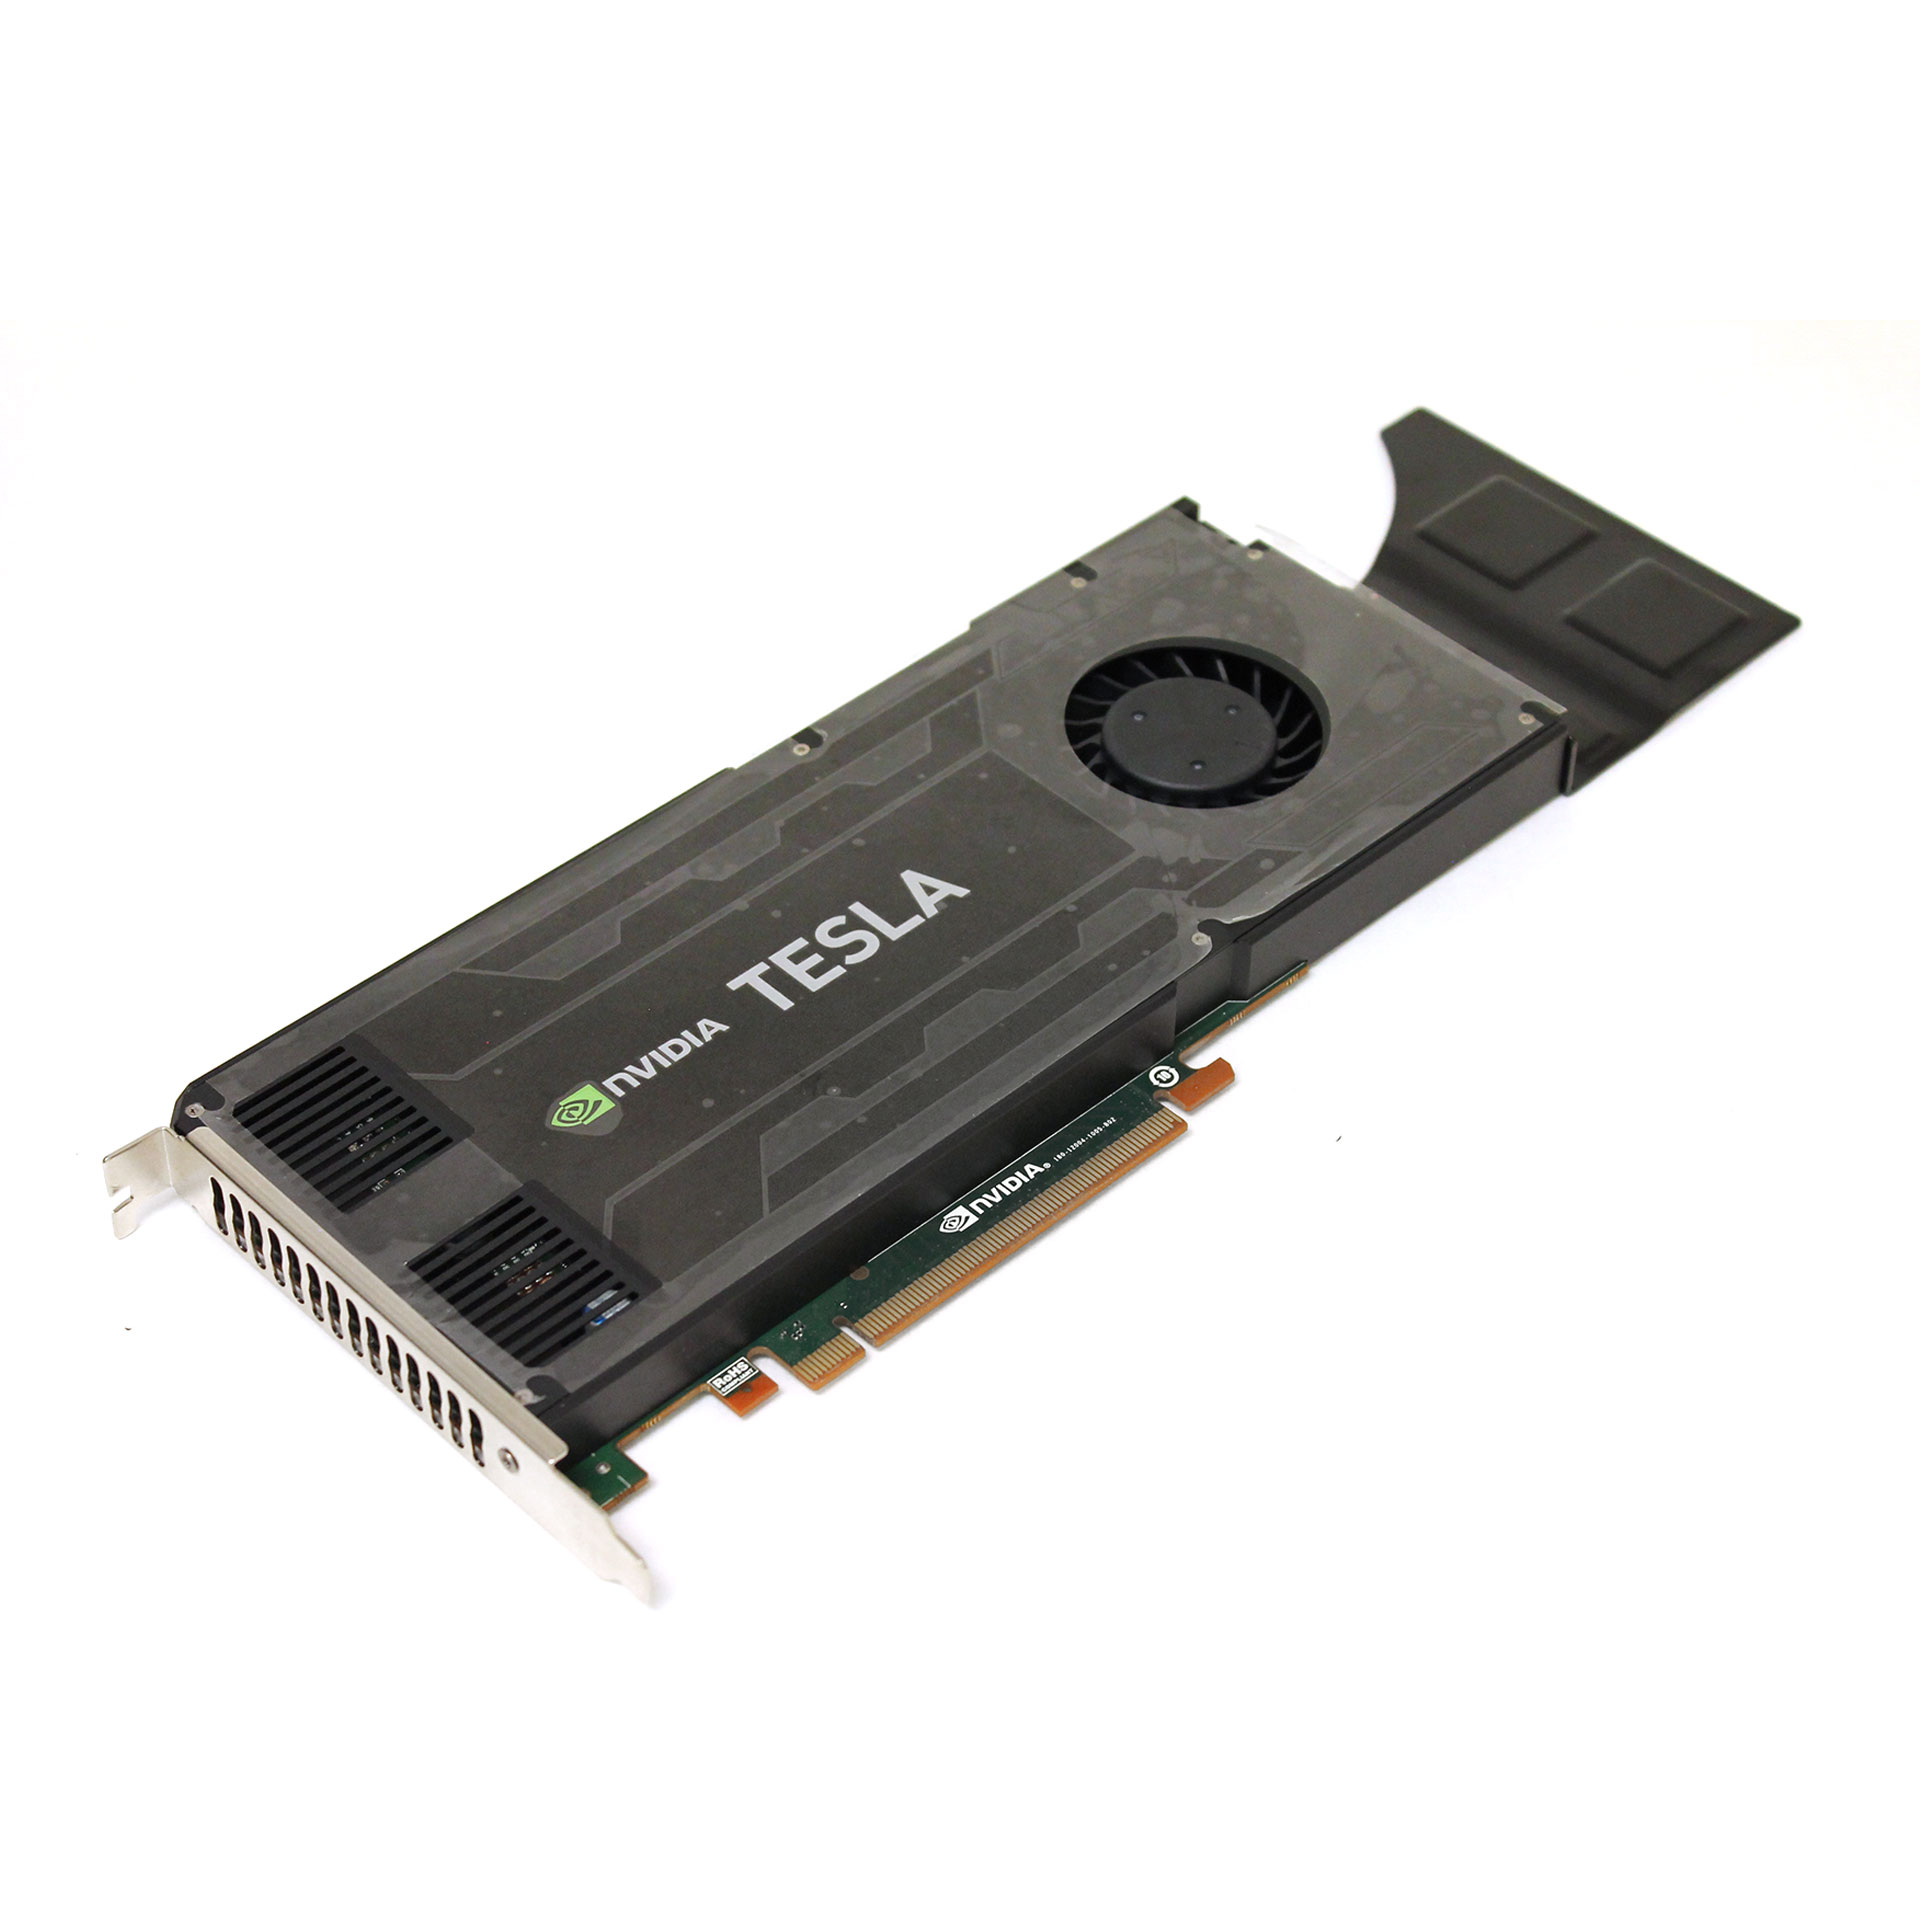 Nvidia TESLA K8 GPU Active Accelerator 900-22004-0000-000